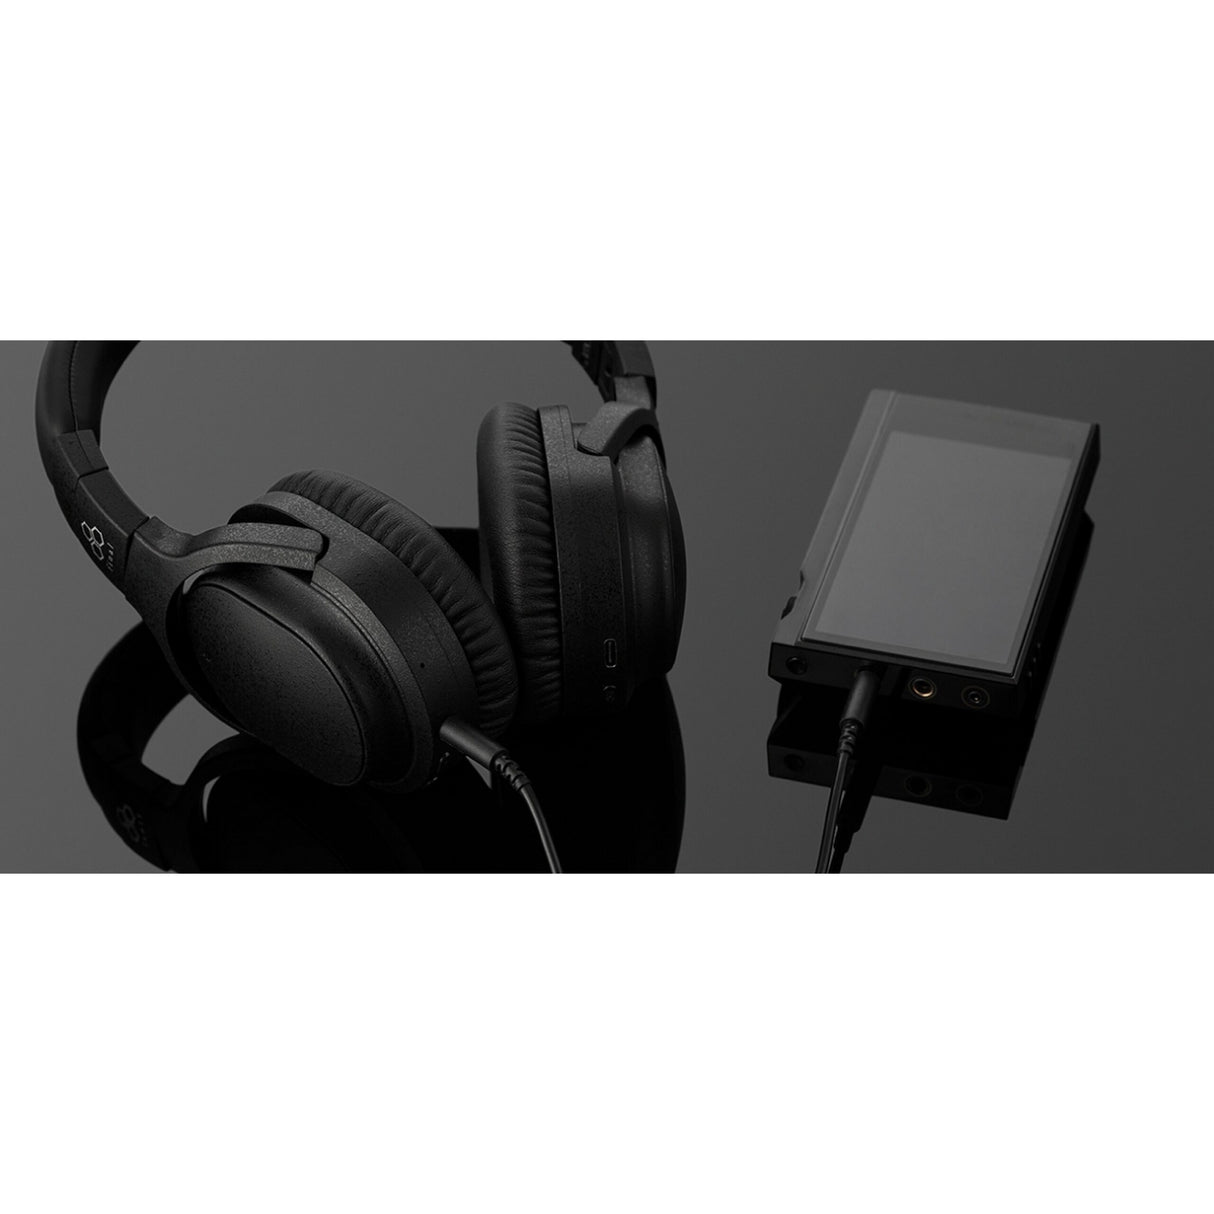 Final Audio UX3000 Hi-Fi Sound Bluetooth Wireless Over-Ear Headphones, Black